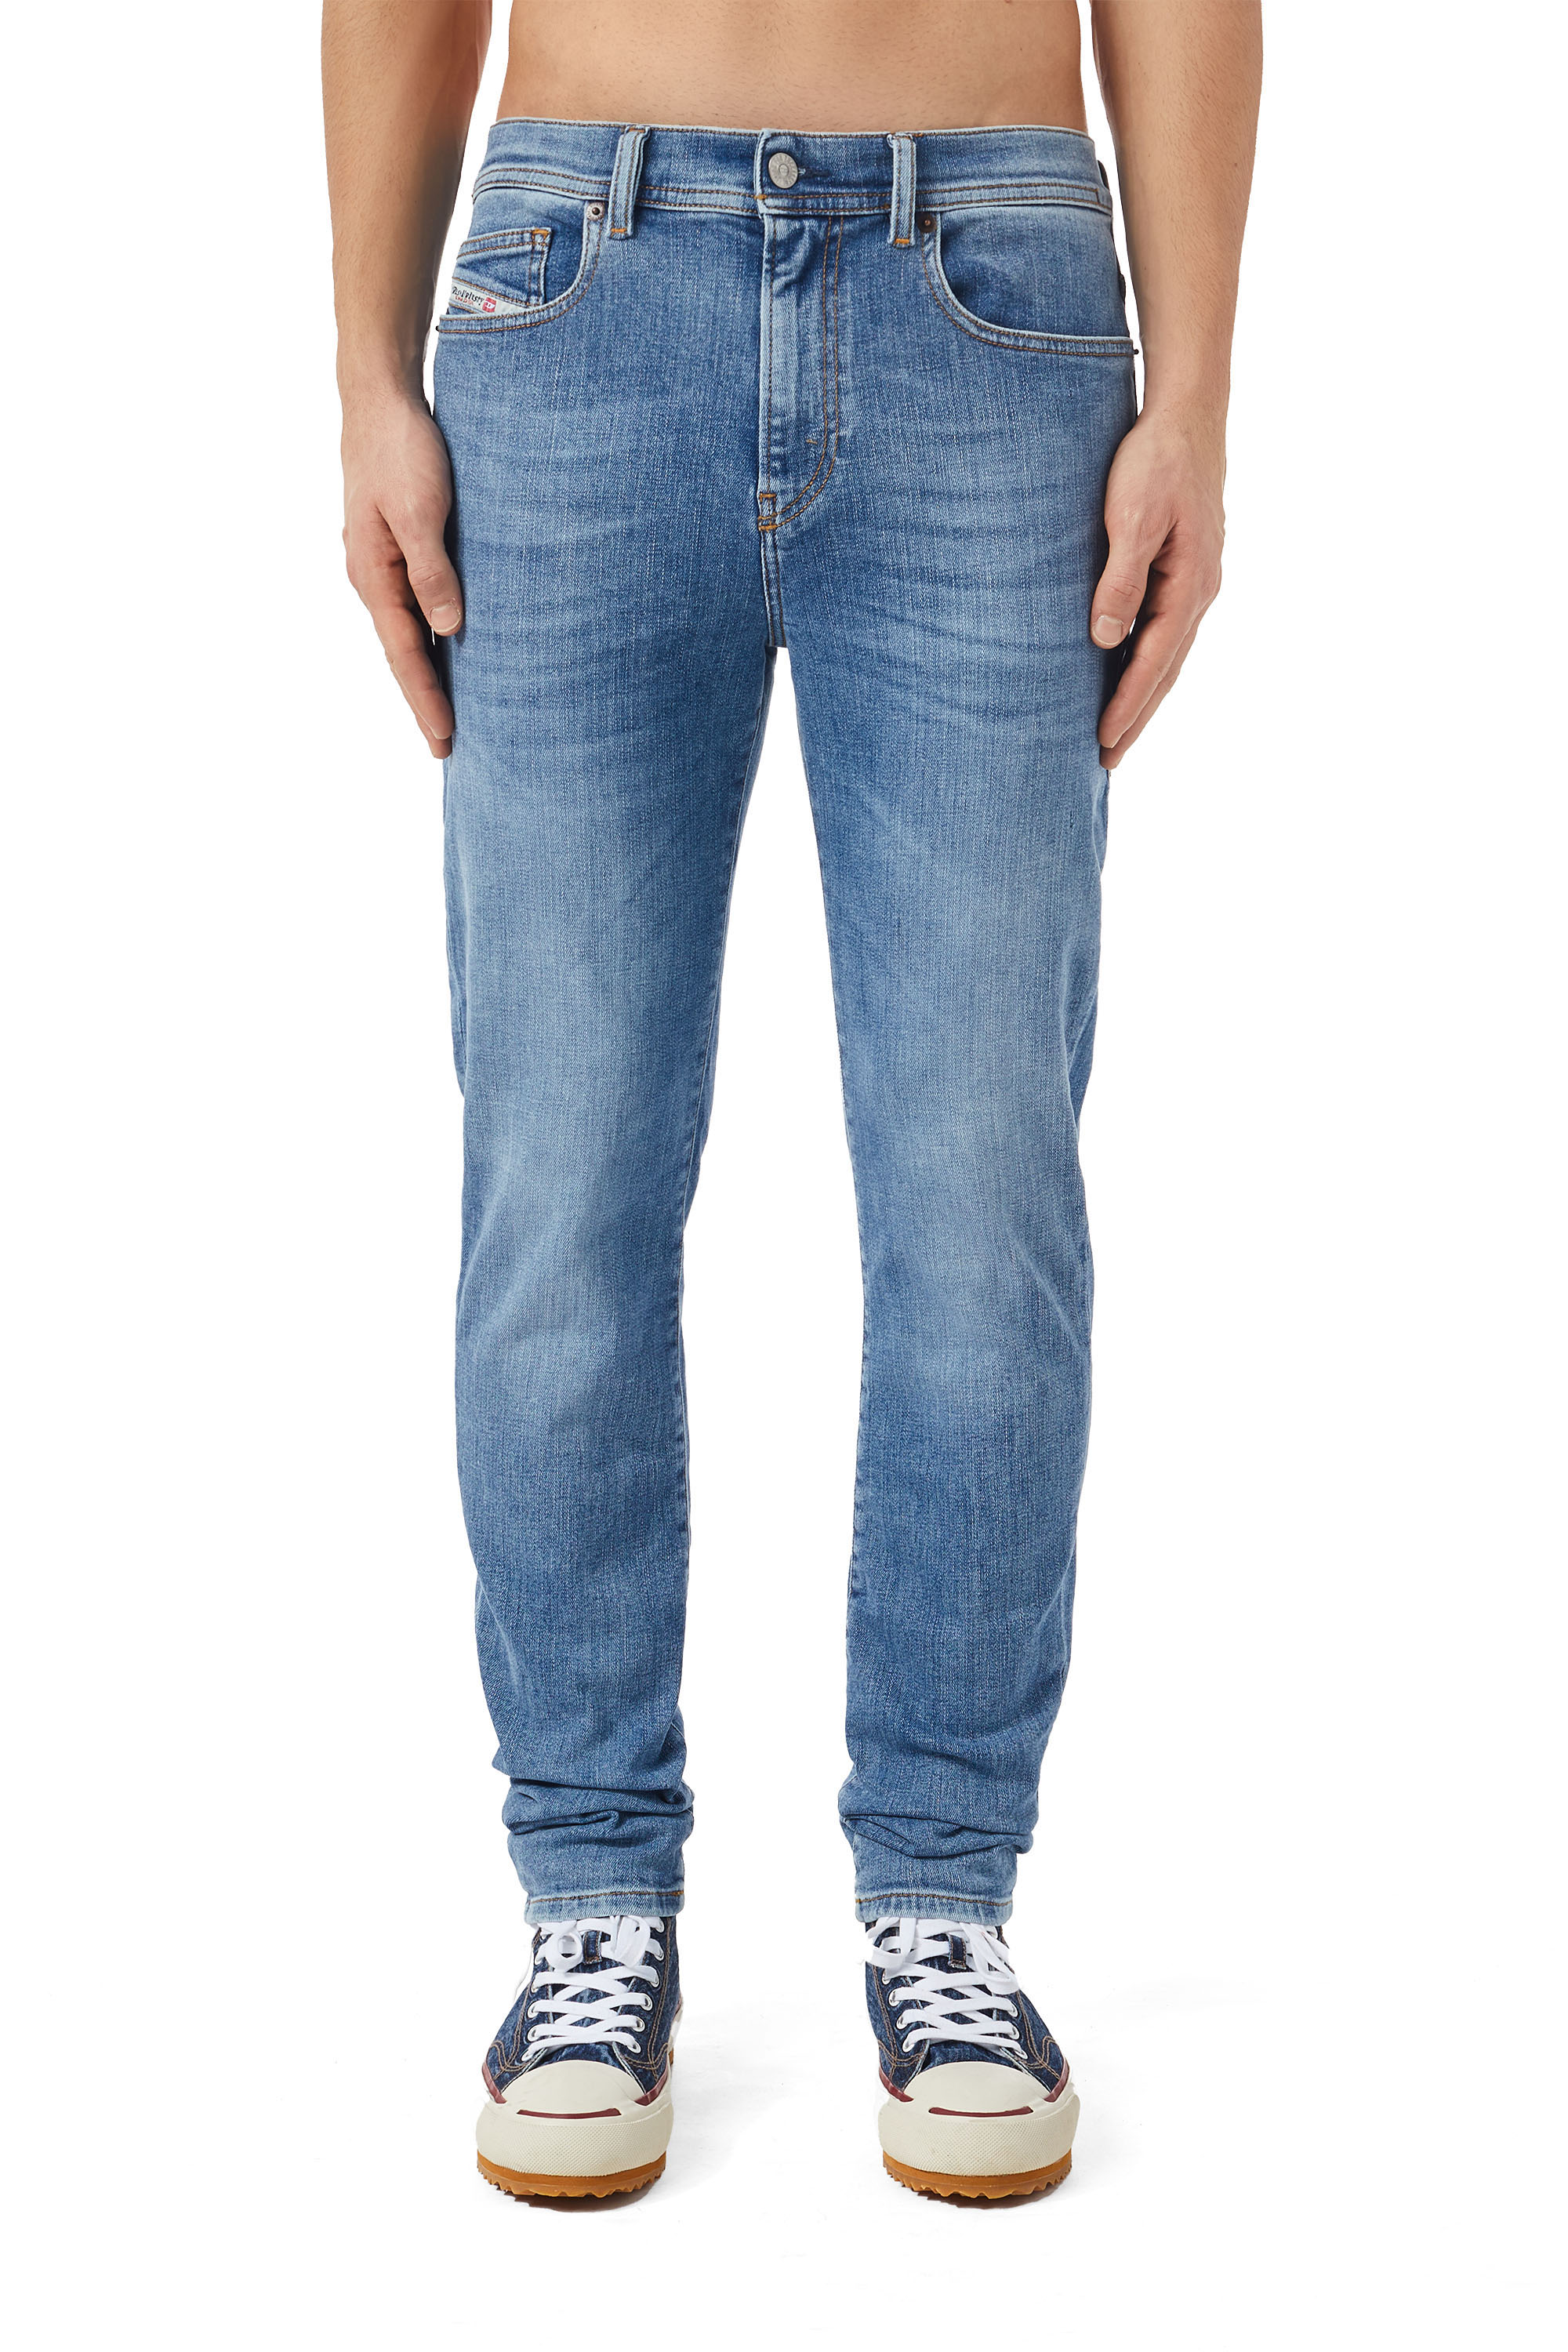 1983 09C01 Skinny Jeans, Medium blue - Jeans